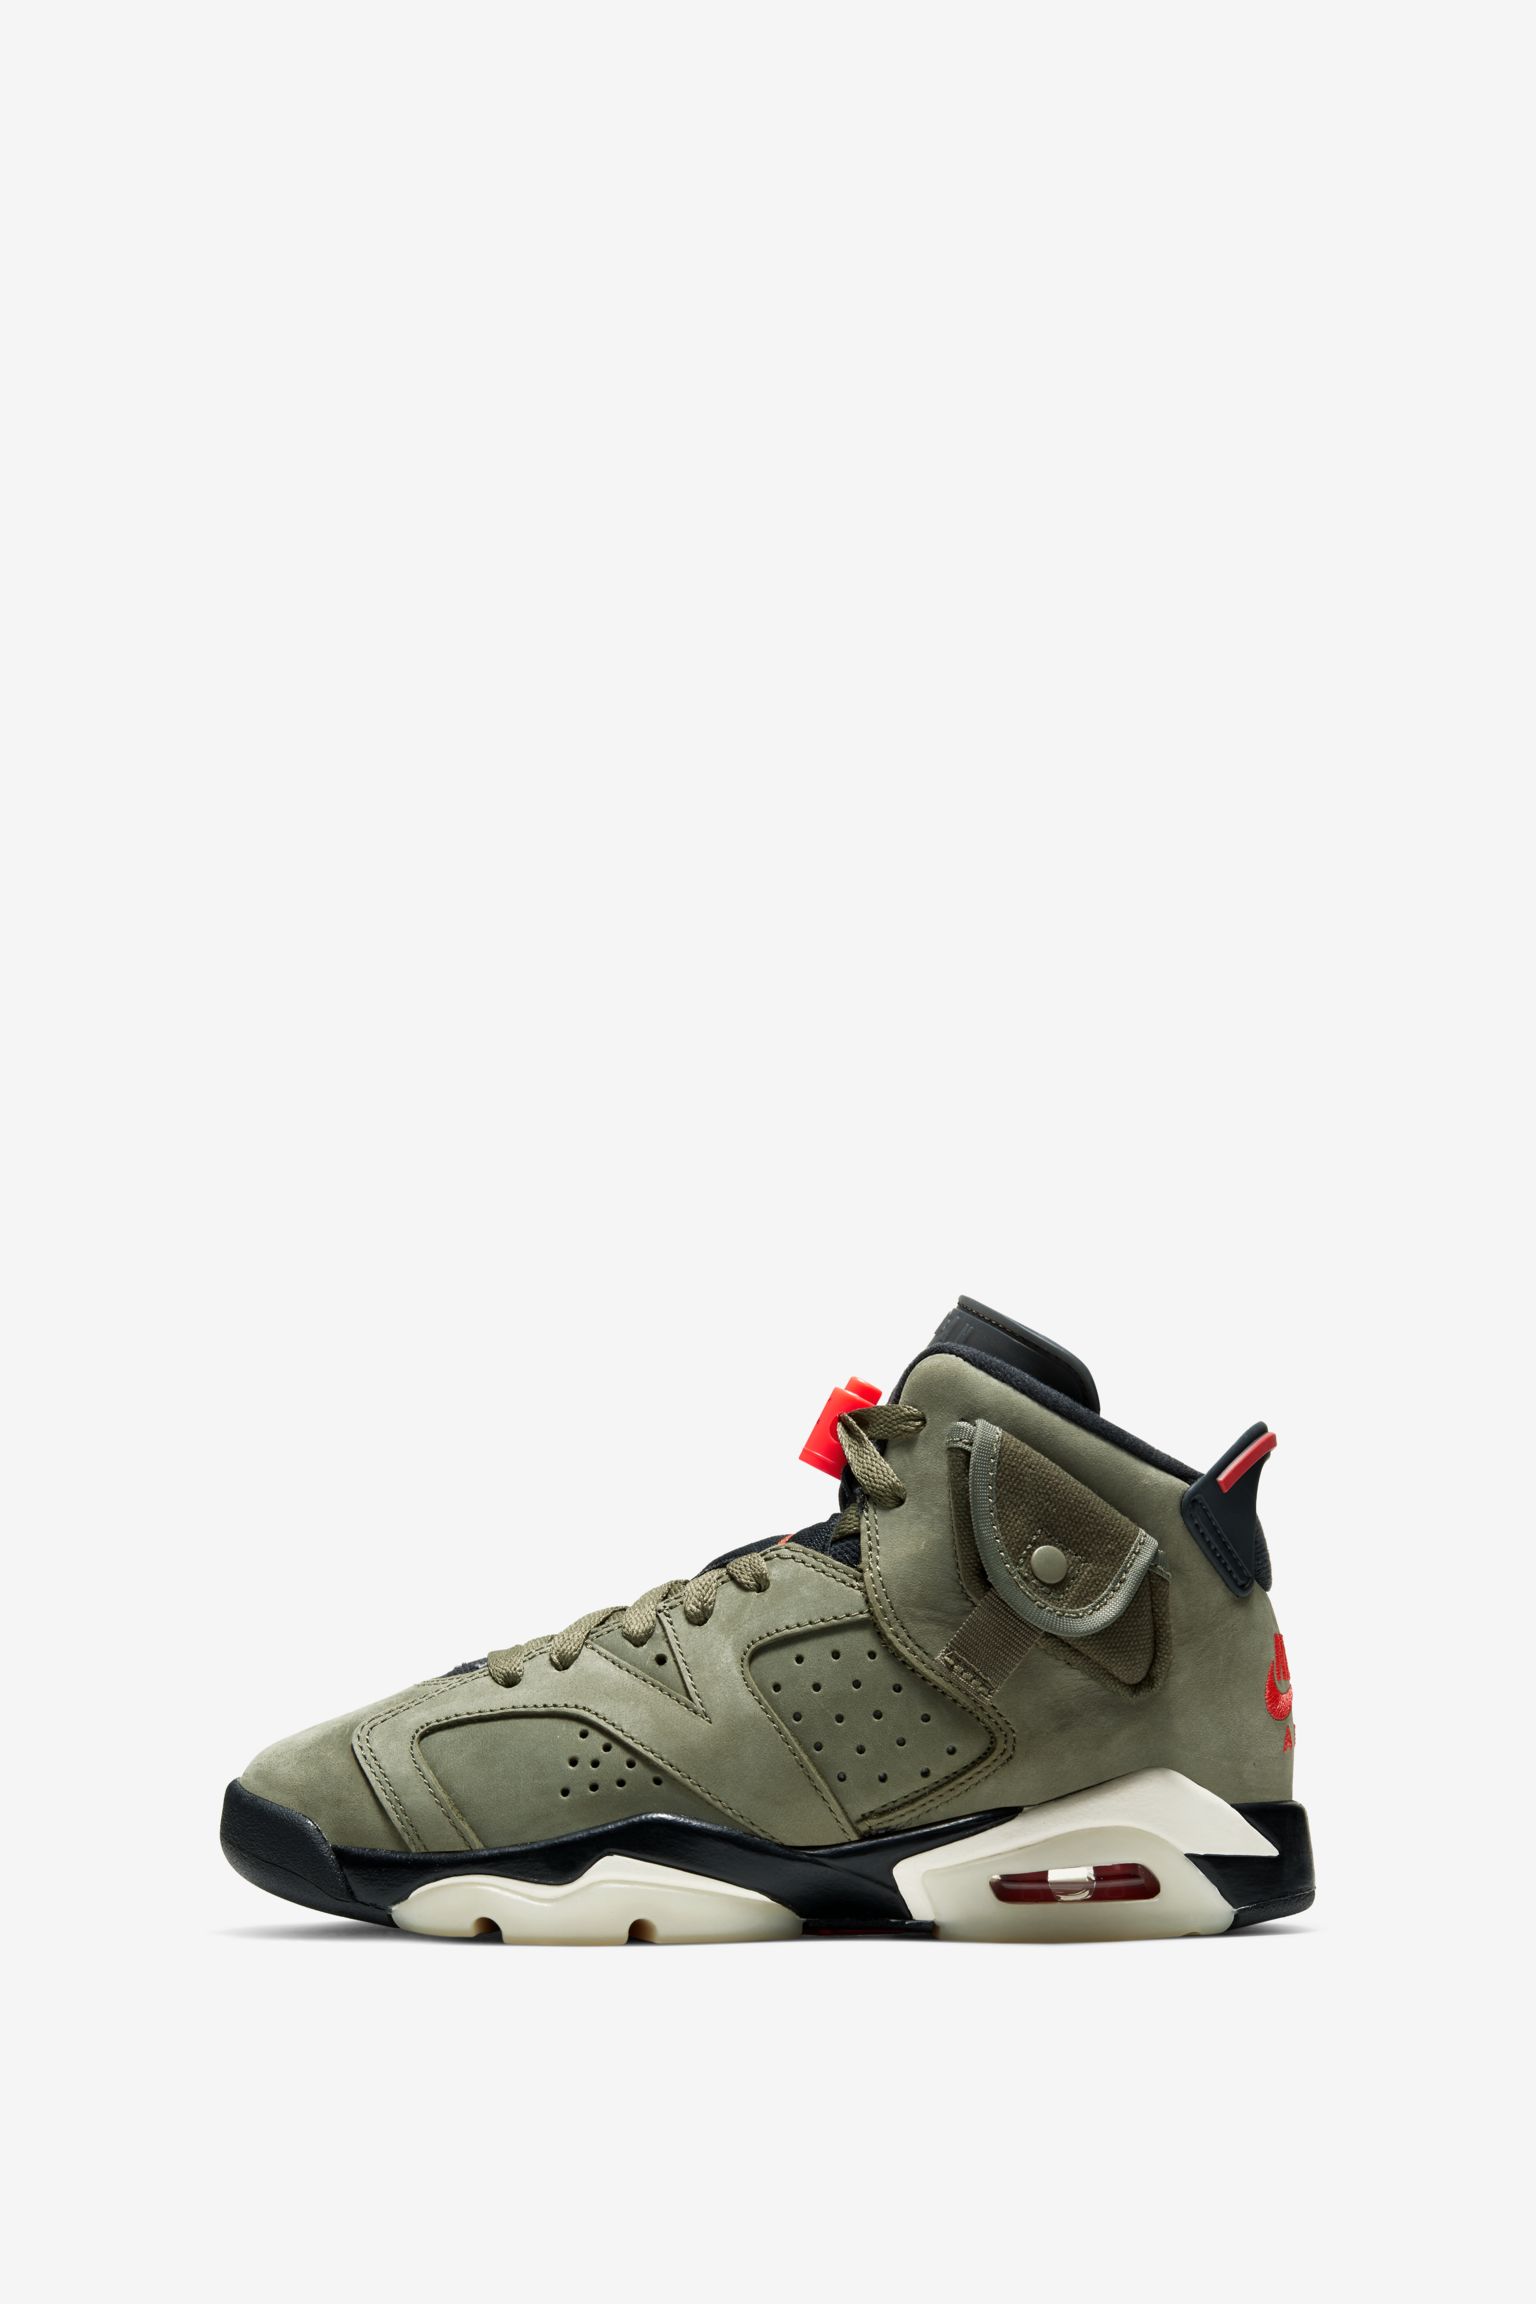 Air Jordan 6 'Travis Scott' Release Date. Nike SNKRS CA